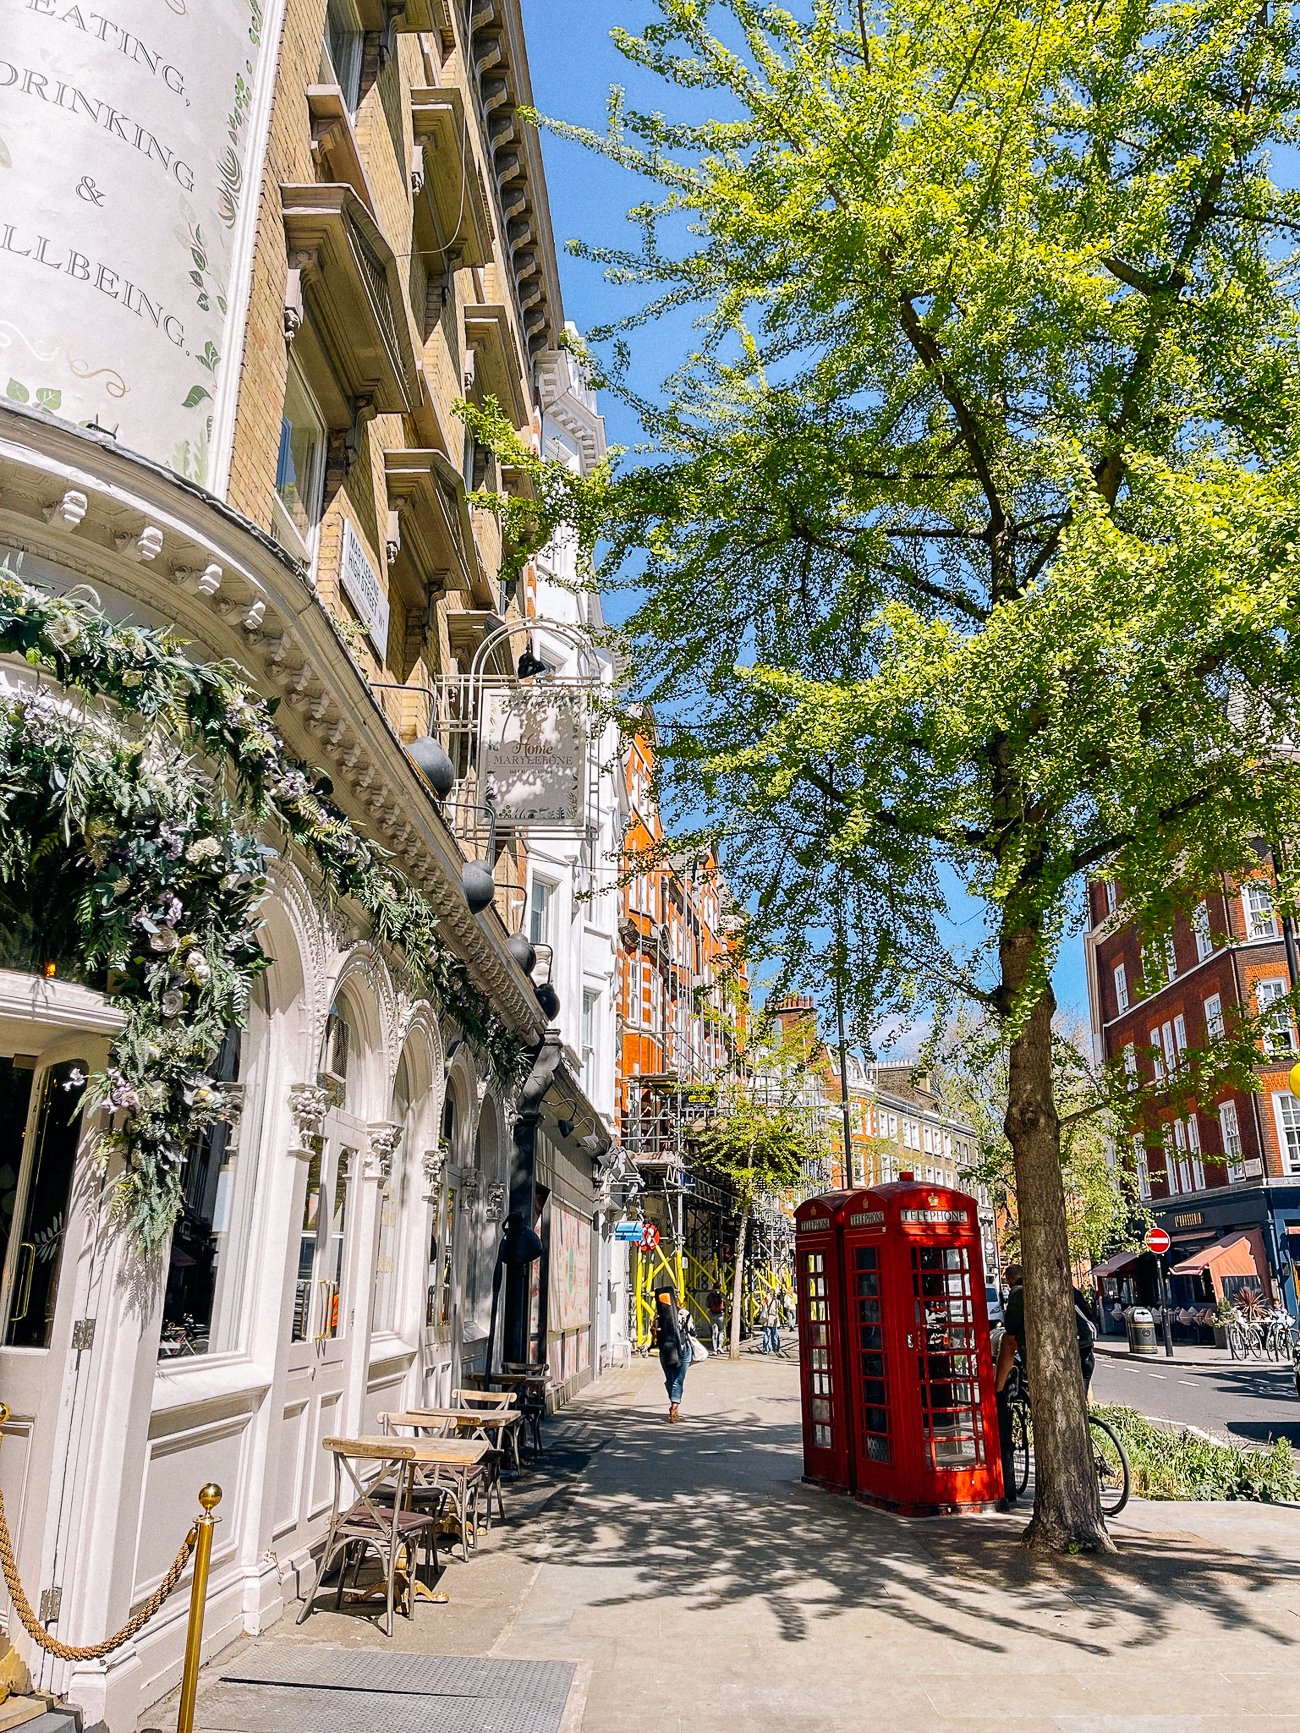 Marylebone red phone booth